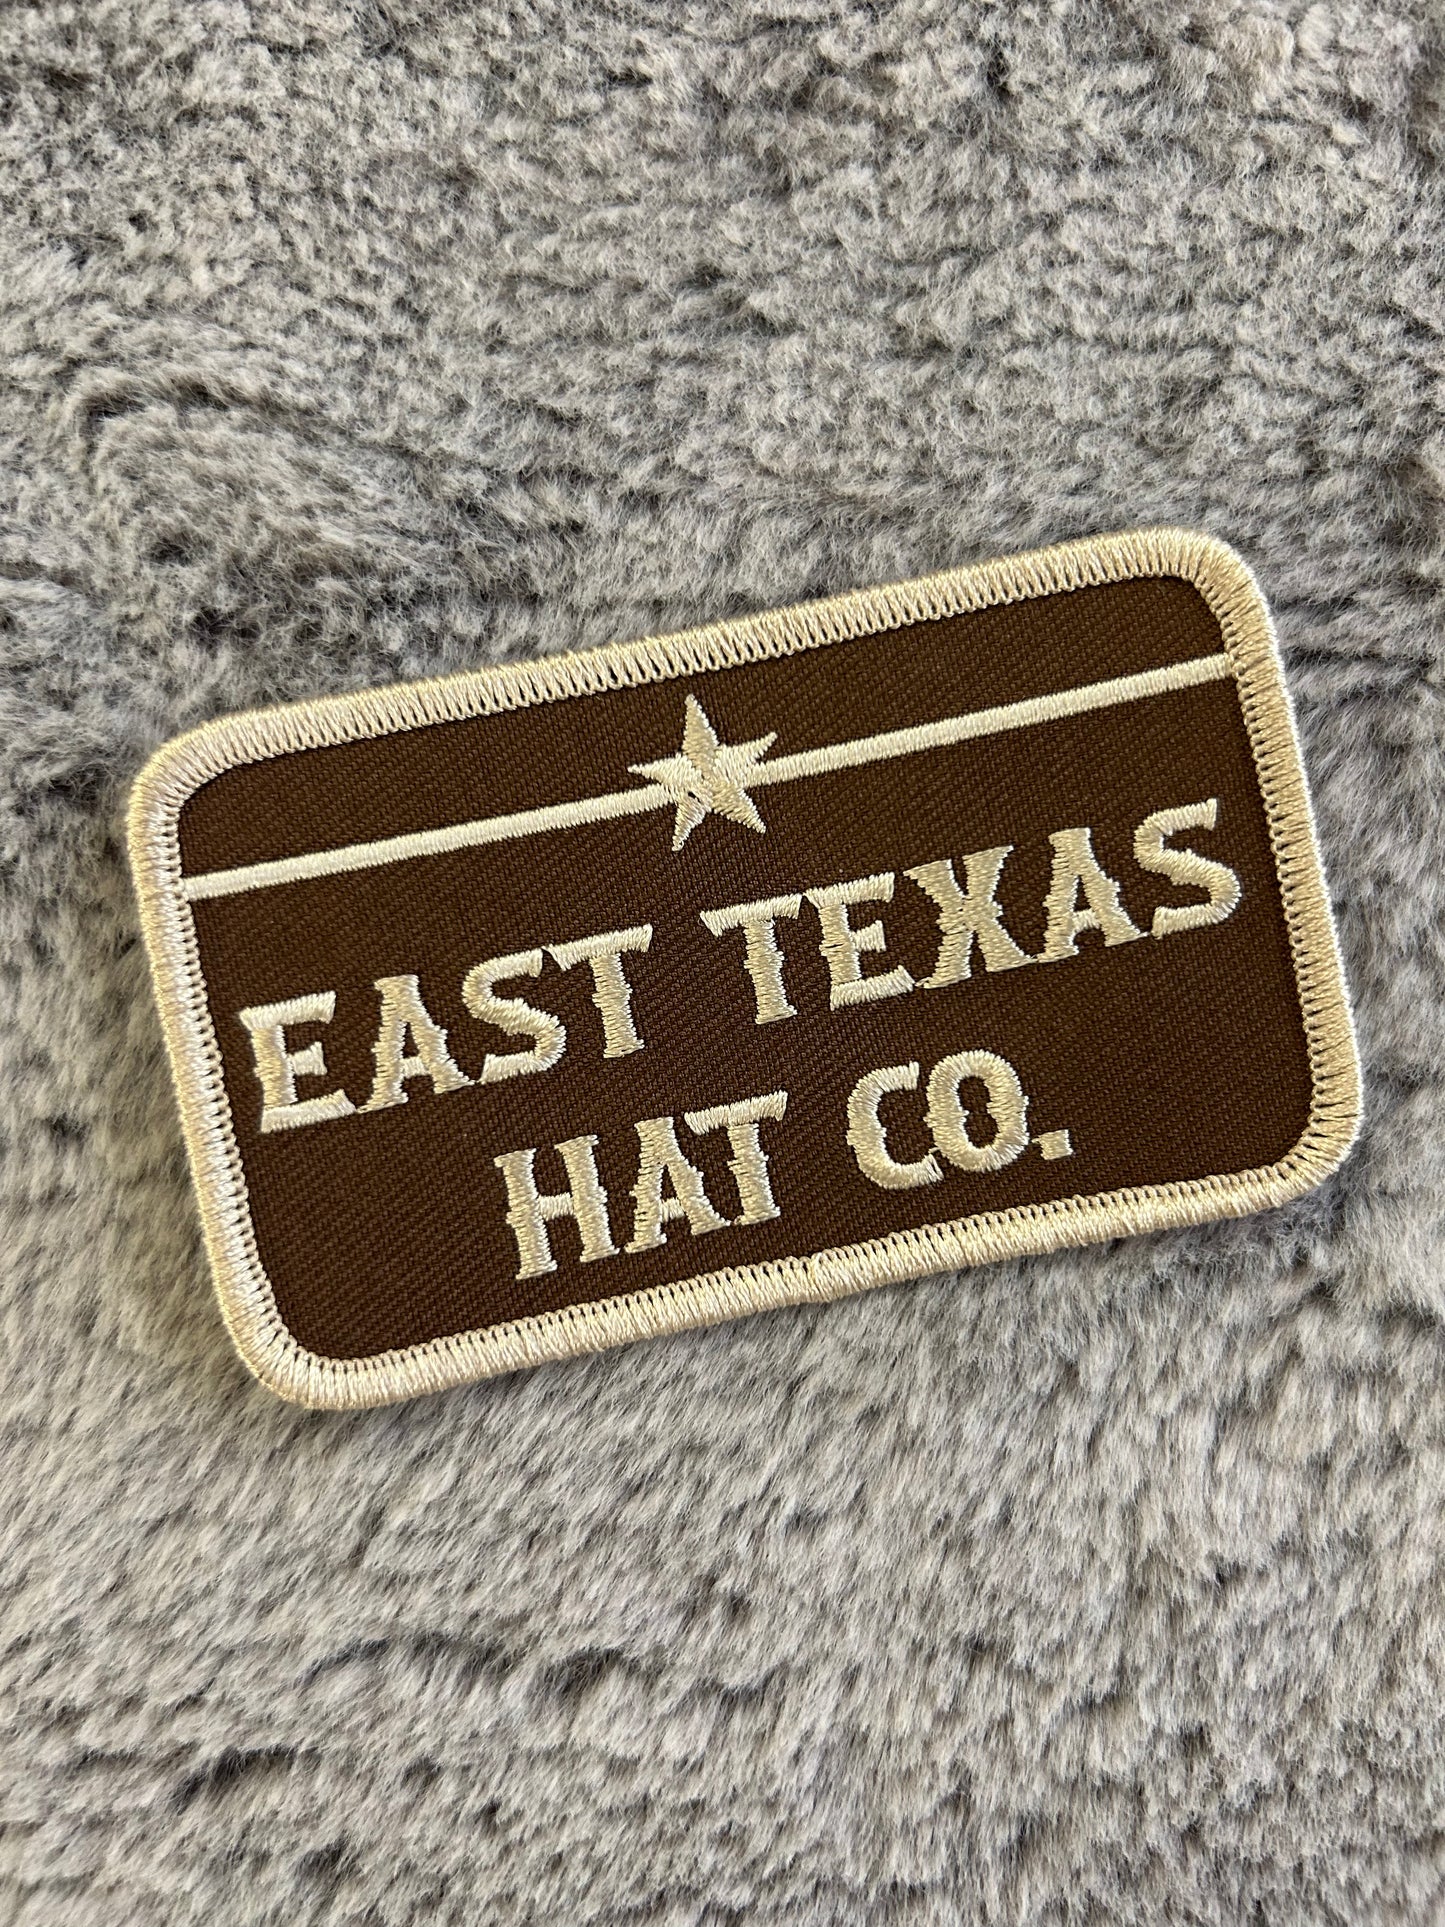 ETX Hat Co. Patch - Brown